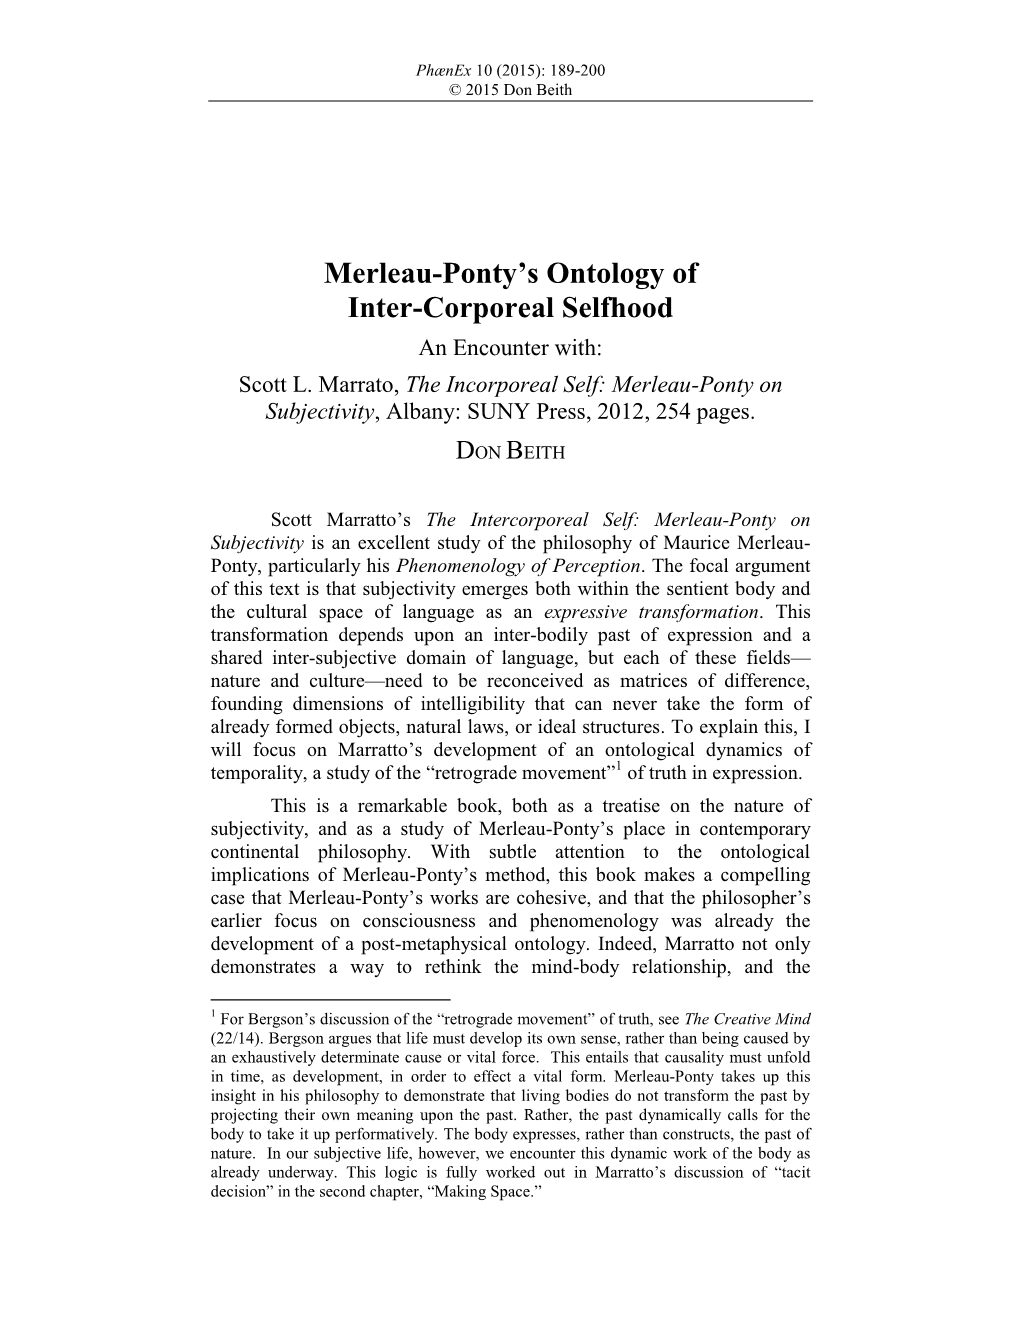 Merleau-Ponty's Ontology of Inter-Corporeal Selfhood